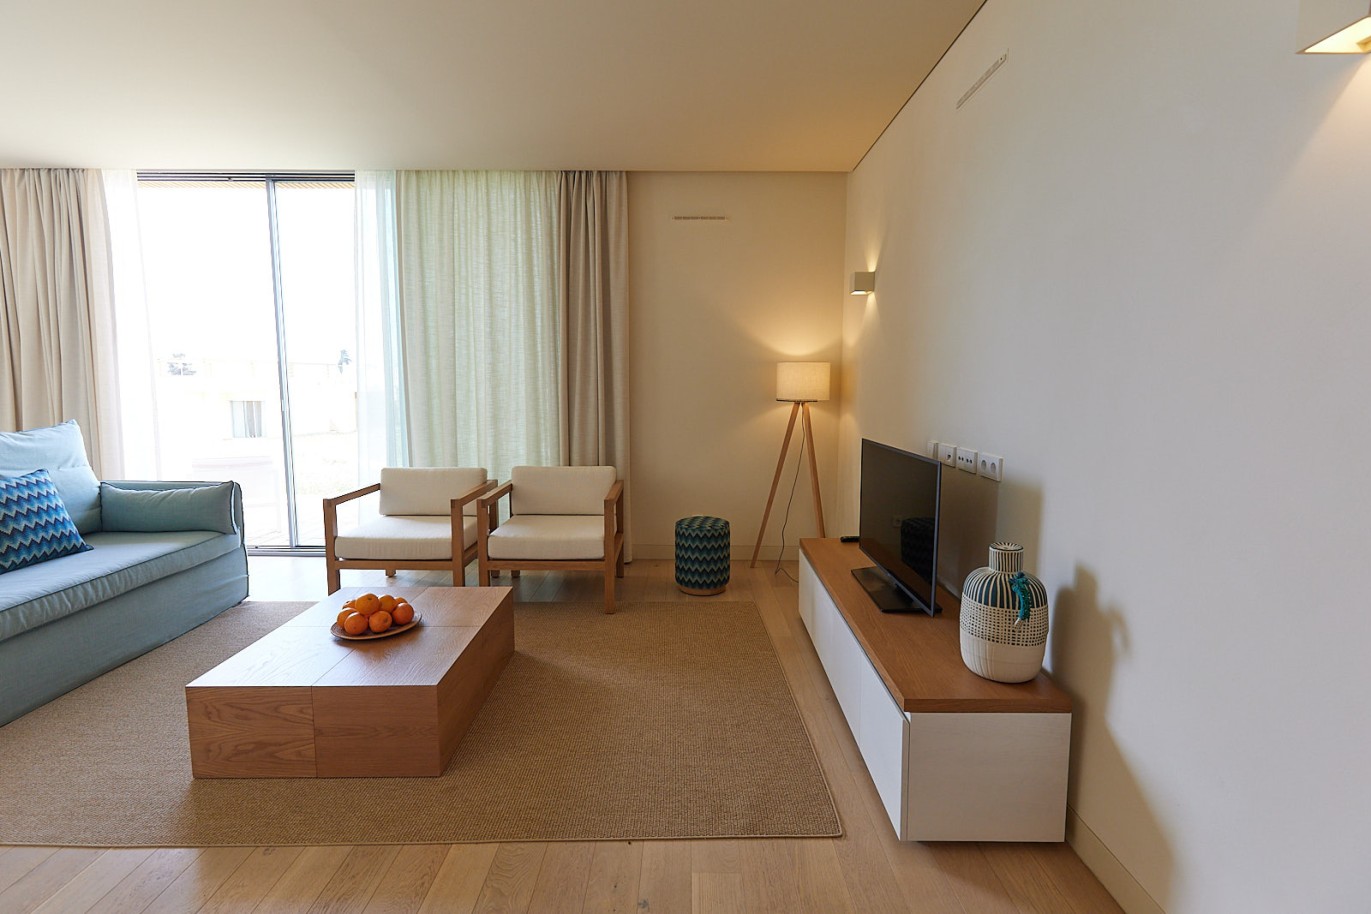 2 bedroom apartment in resort, for sale in Porches, Algarve_228783